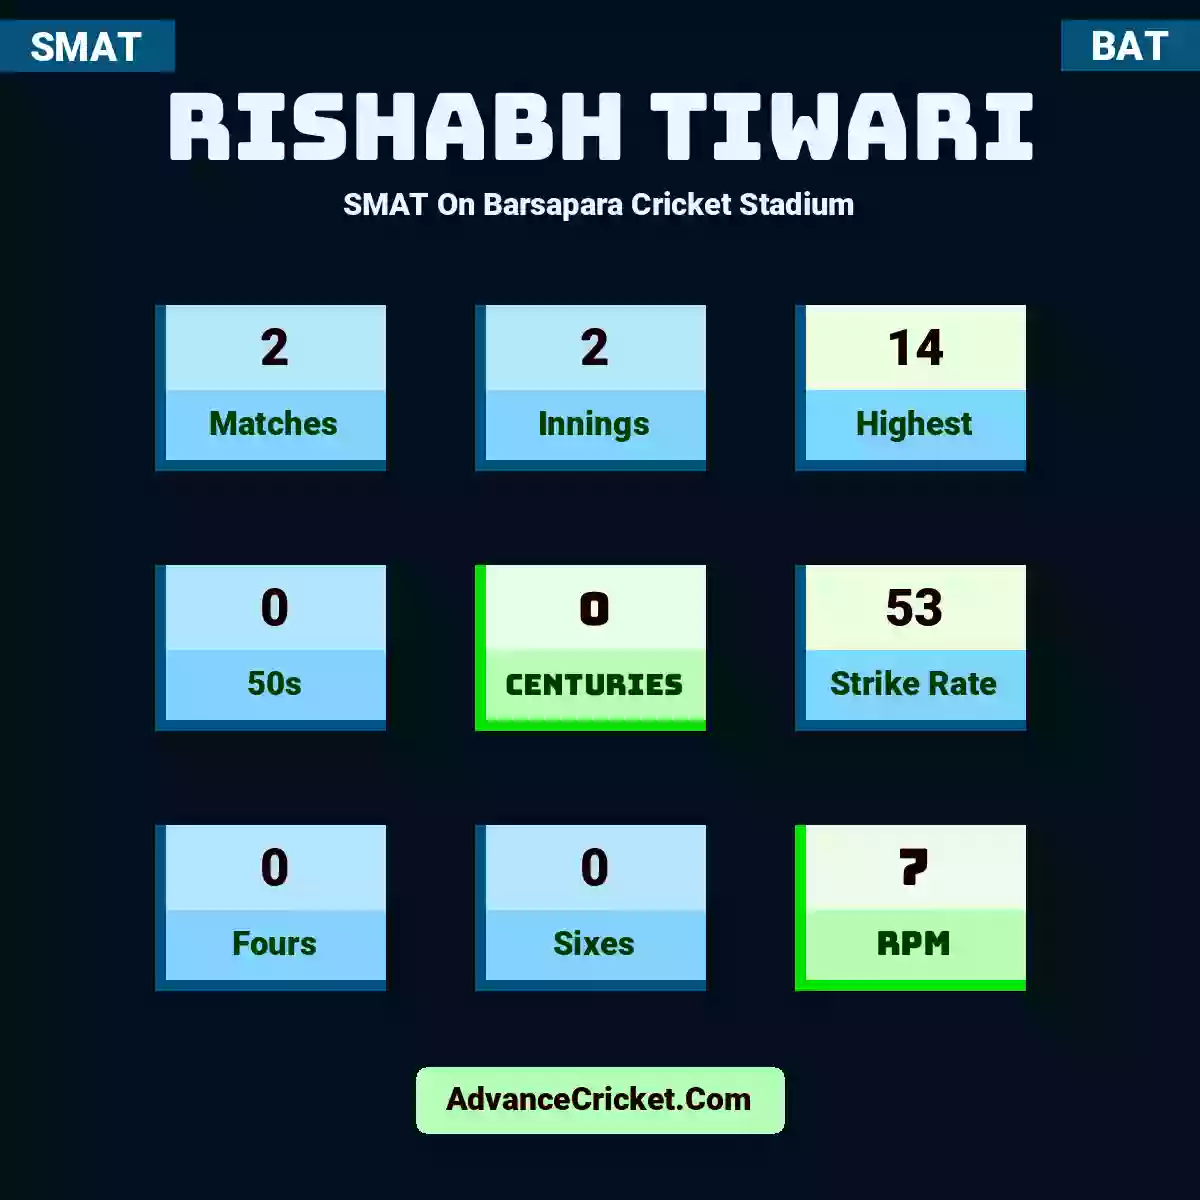 Rishabh Tiwari SMAT  On Barsapara Cricket Stadium, Rishabh Tiwari played 2 matches, scored 14 runs as highest, 0 half-centuries, and 0 centuries, with a strike rate of 53. R.Tiwari hit 0 fours and 0 sixes, with an RPM of 7.